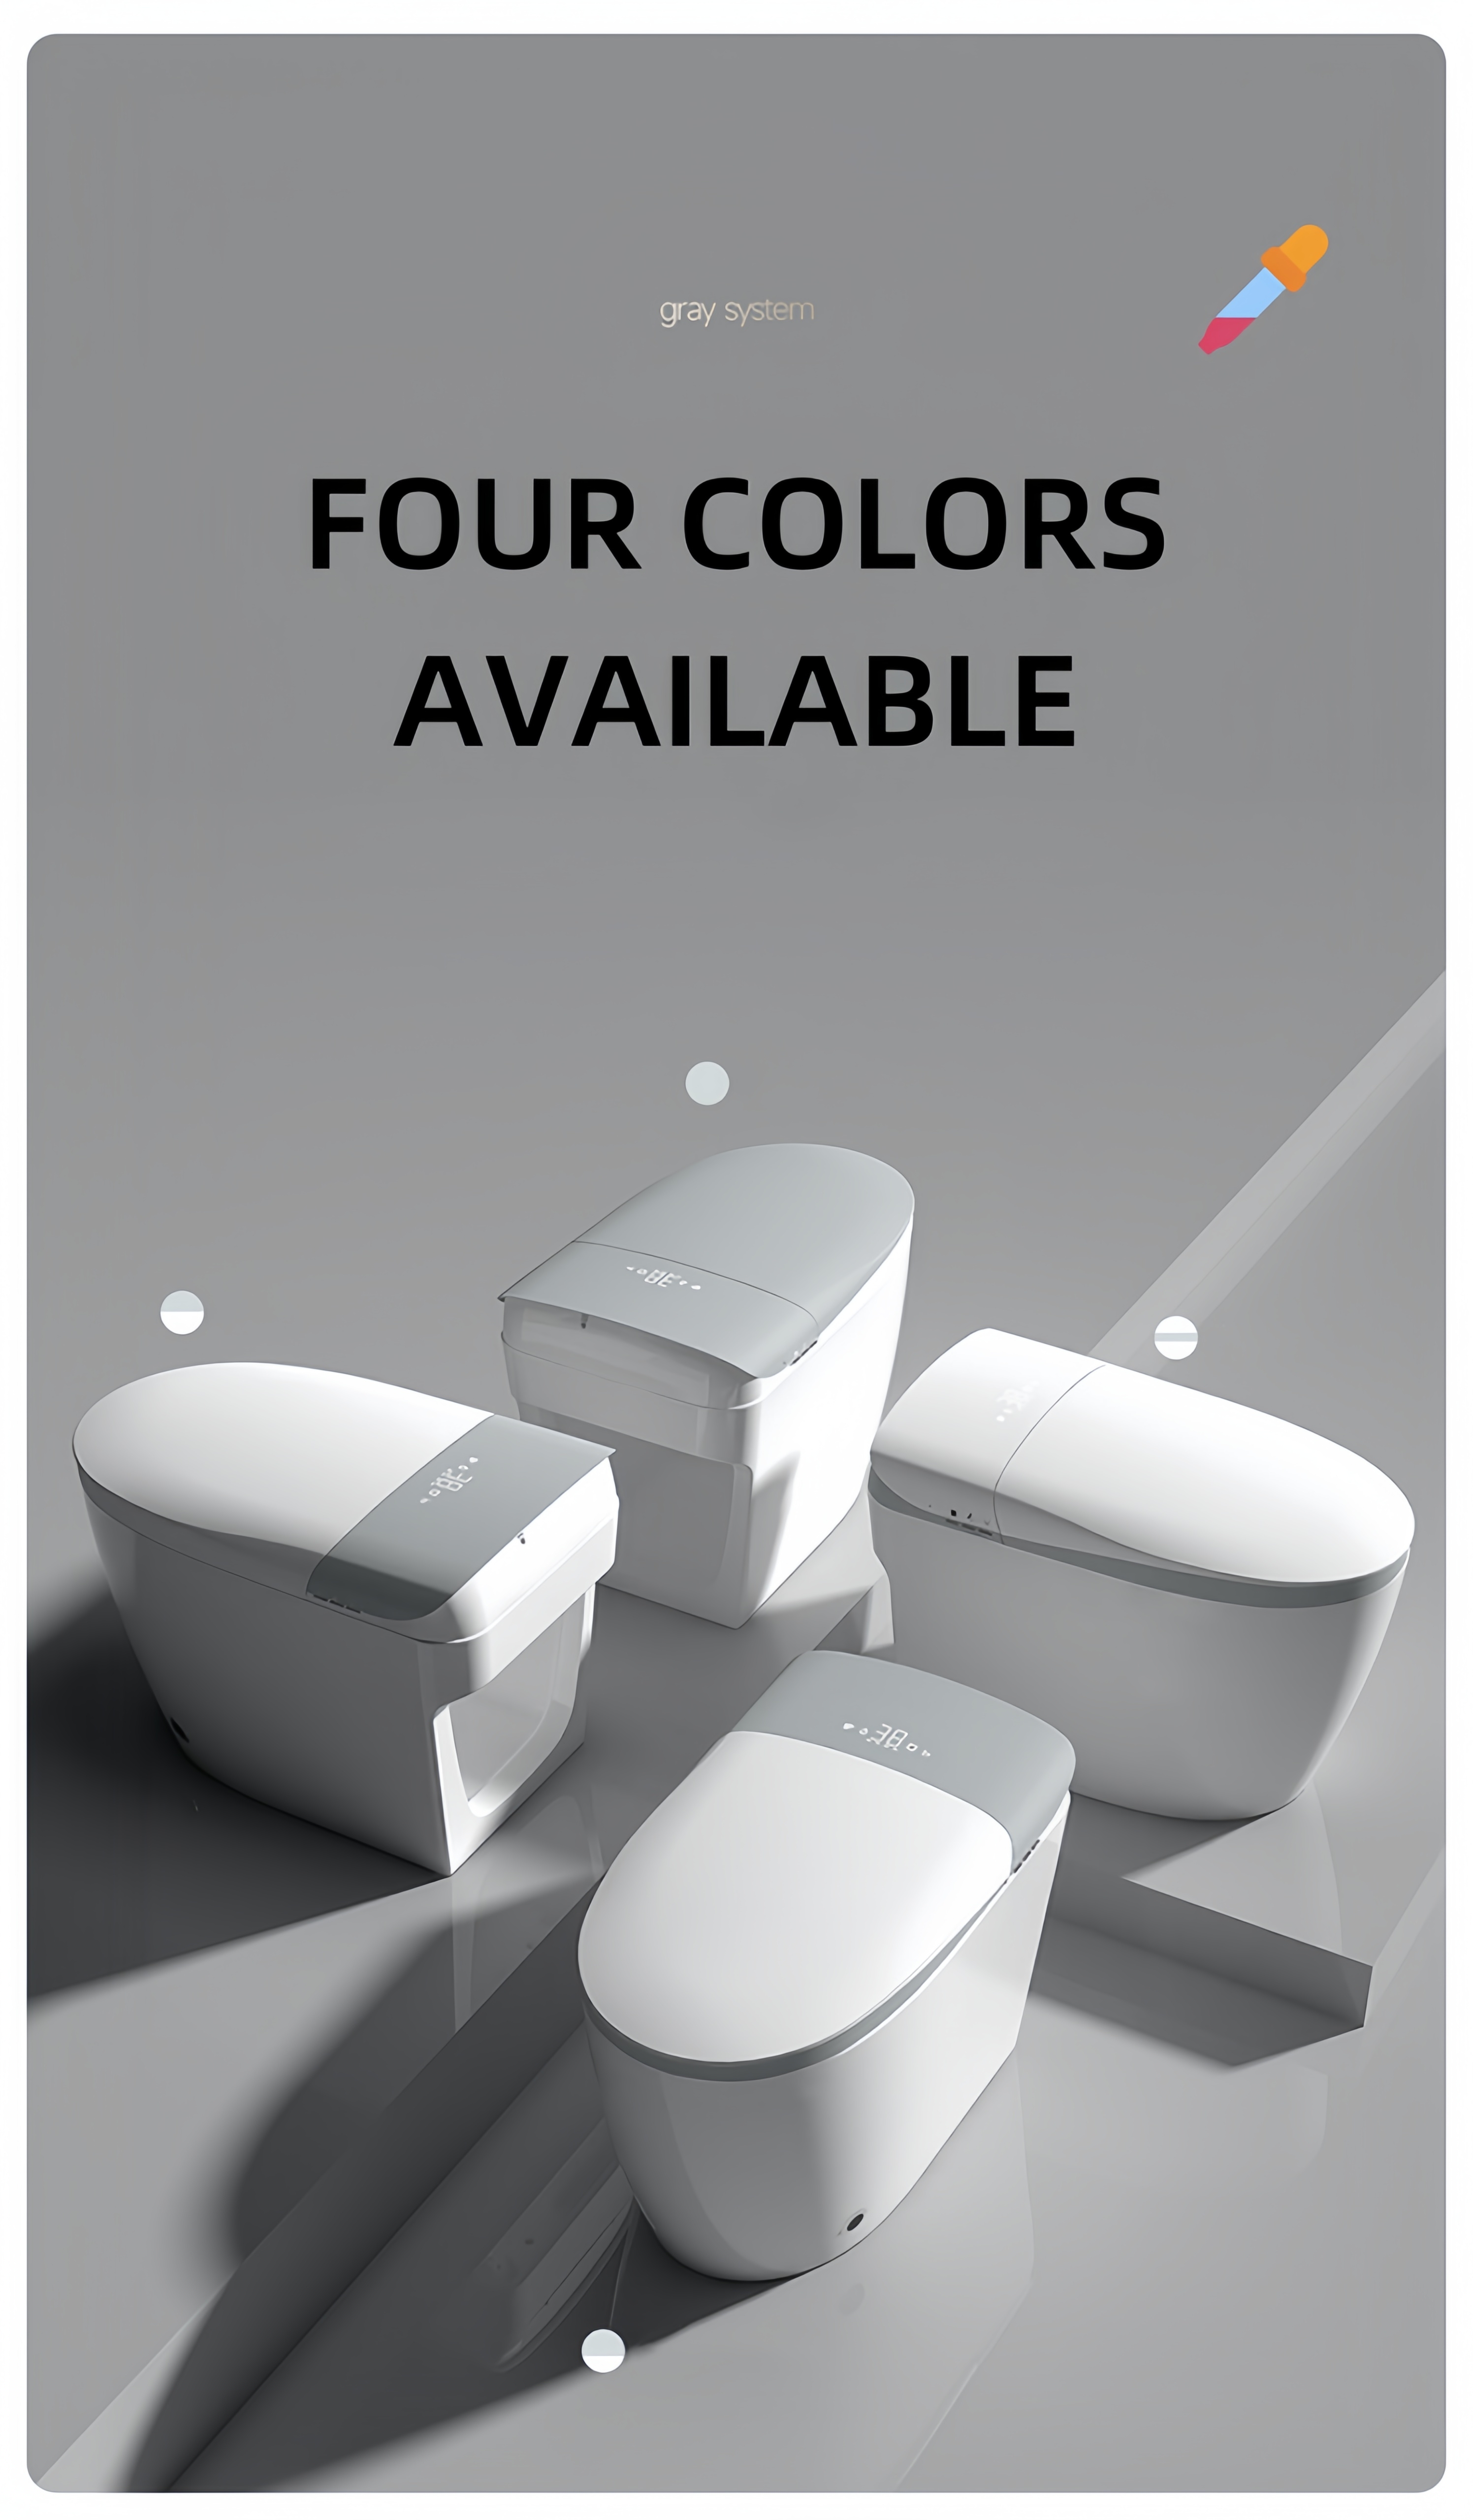 Luxury Smart Intelligent Toilet Ceramic Multi Functions Built In Water Tank Auto Flush